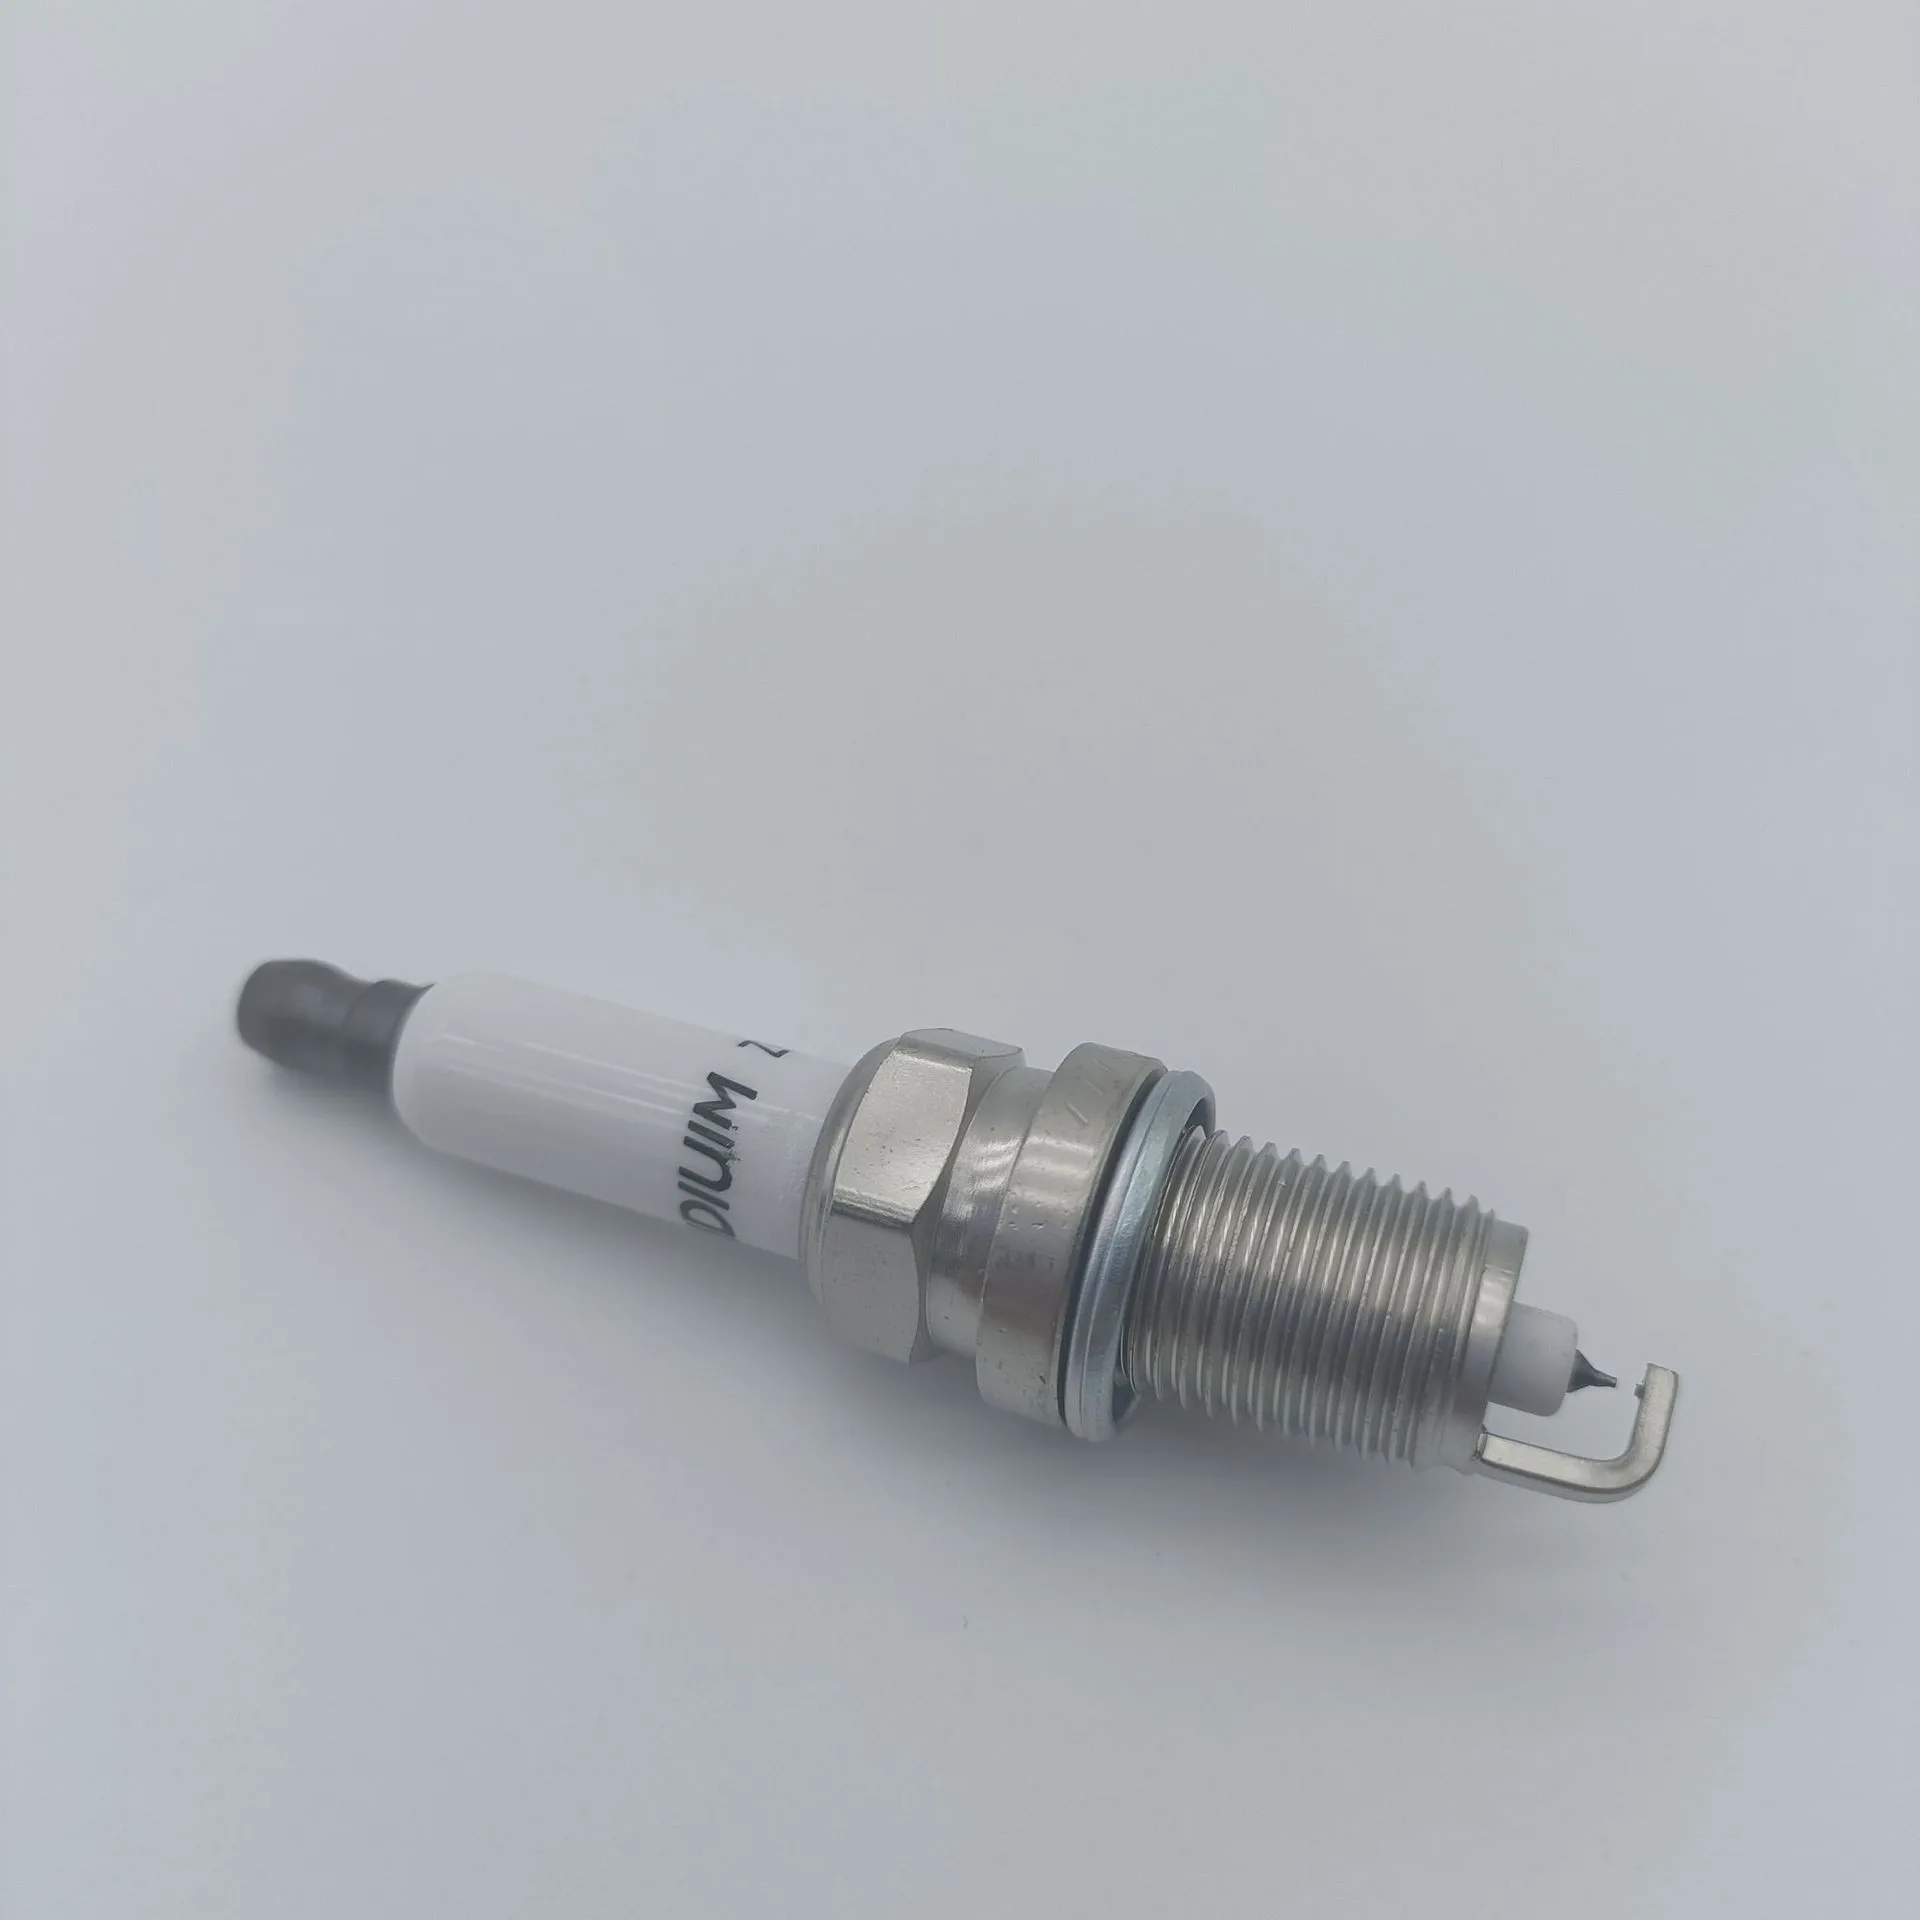 

4Pcs/Lot Iridium Platinum Spark Plugs 1214528 ZFR6BP-G 1748 Fit for OPEL ASTRA H/J 1.6L Ignition Plu Motor Accessories